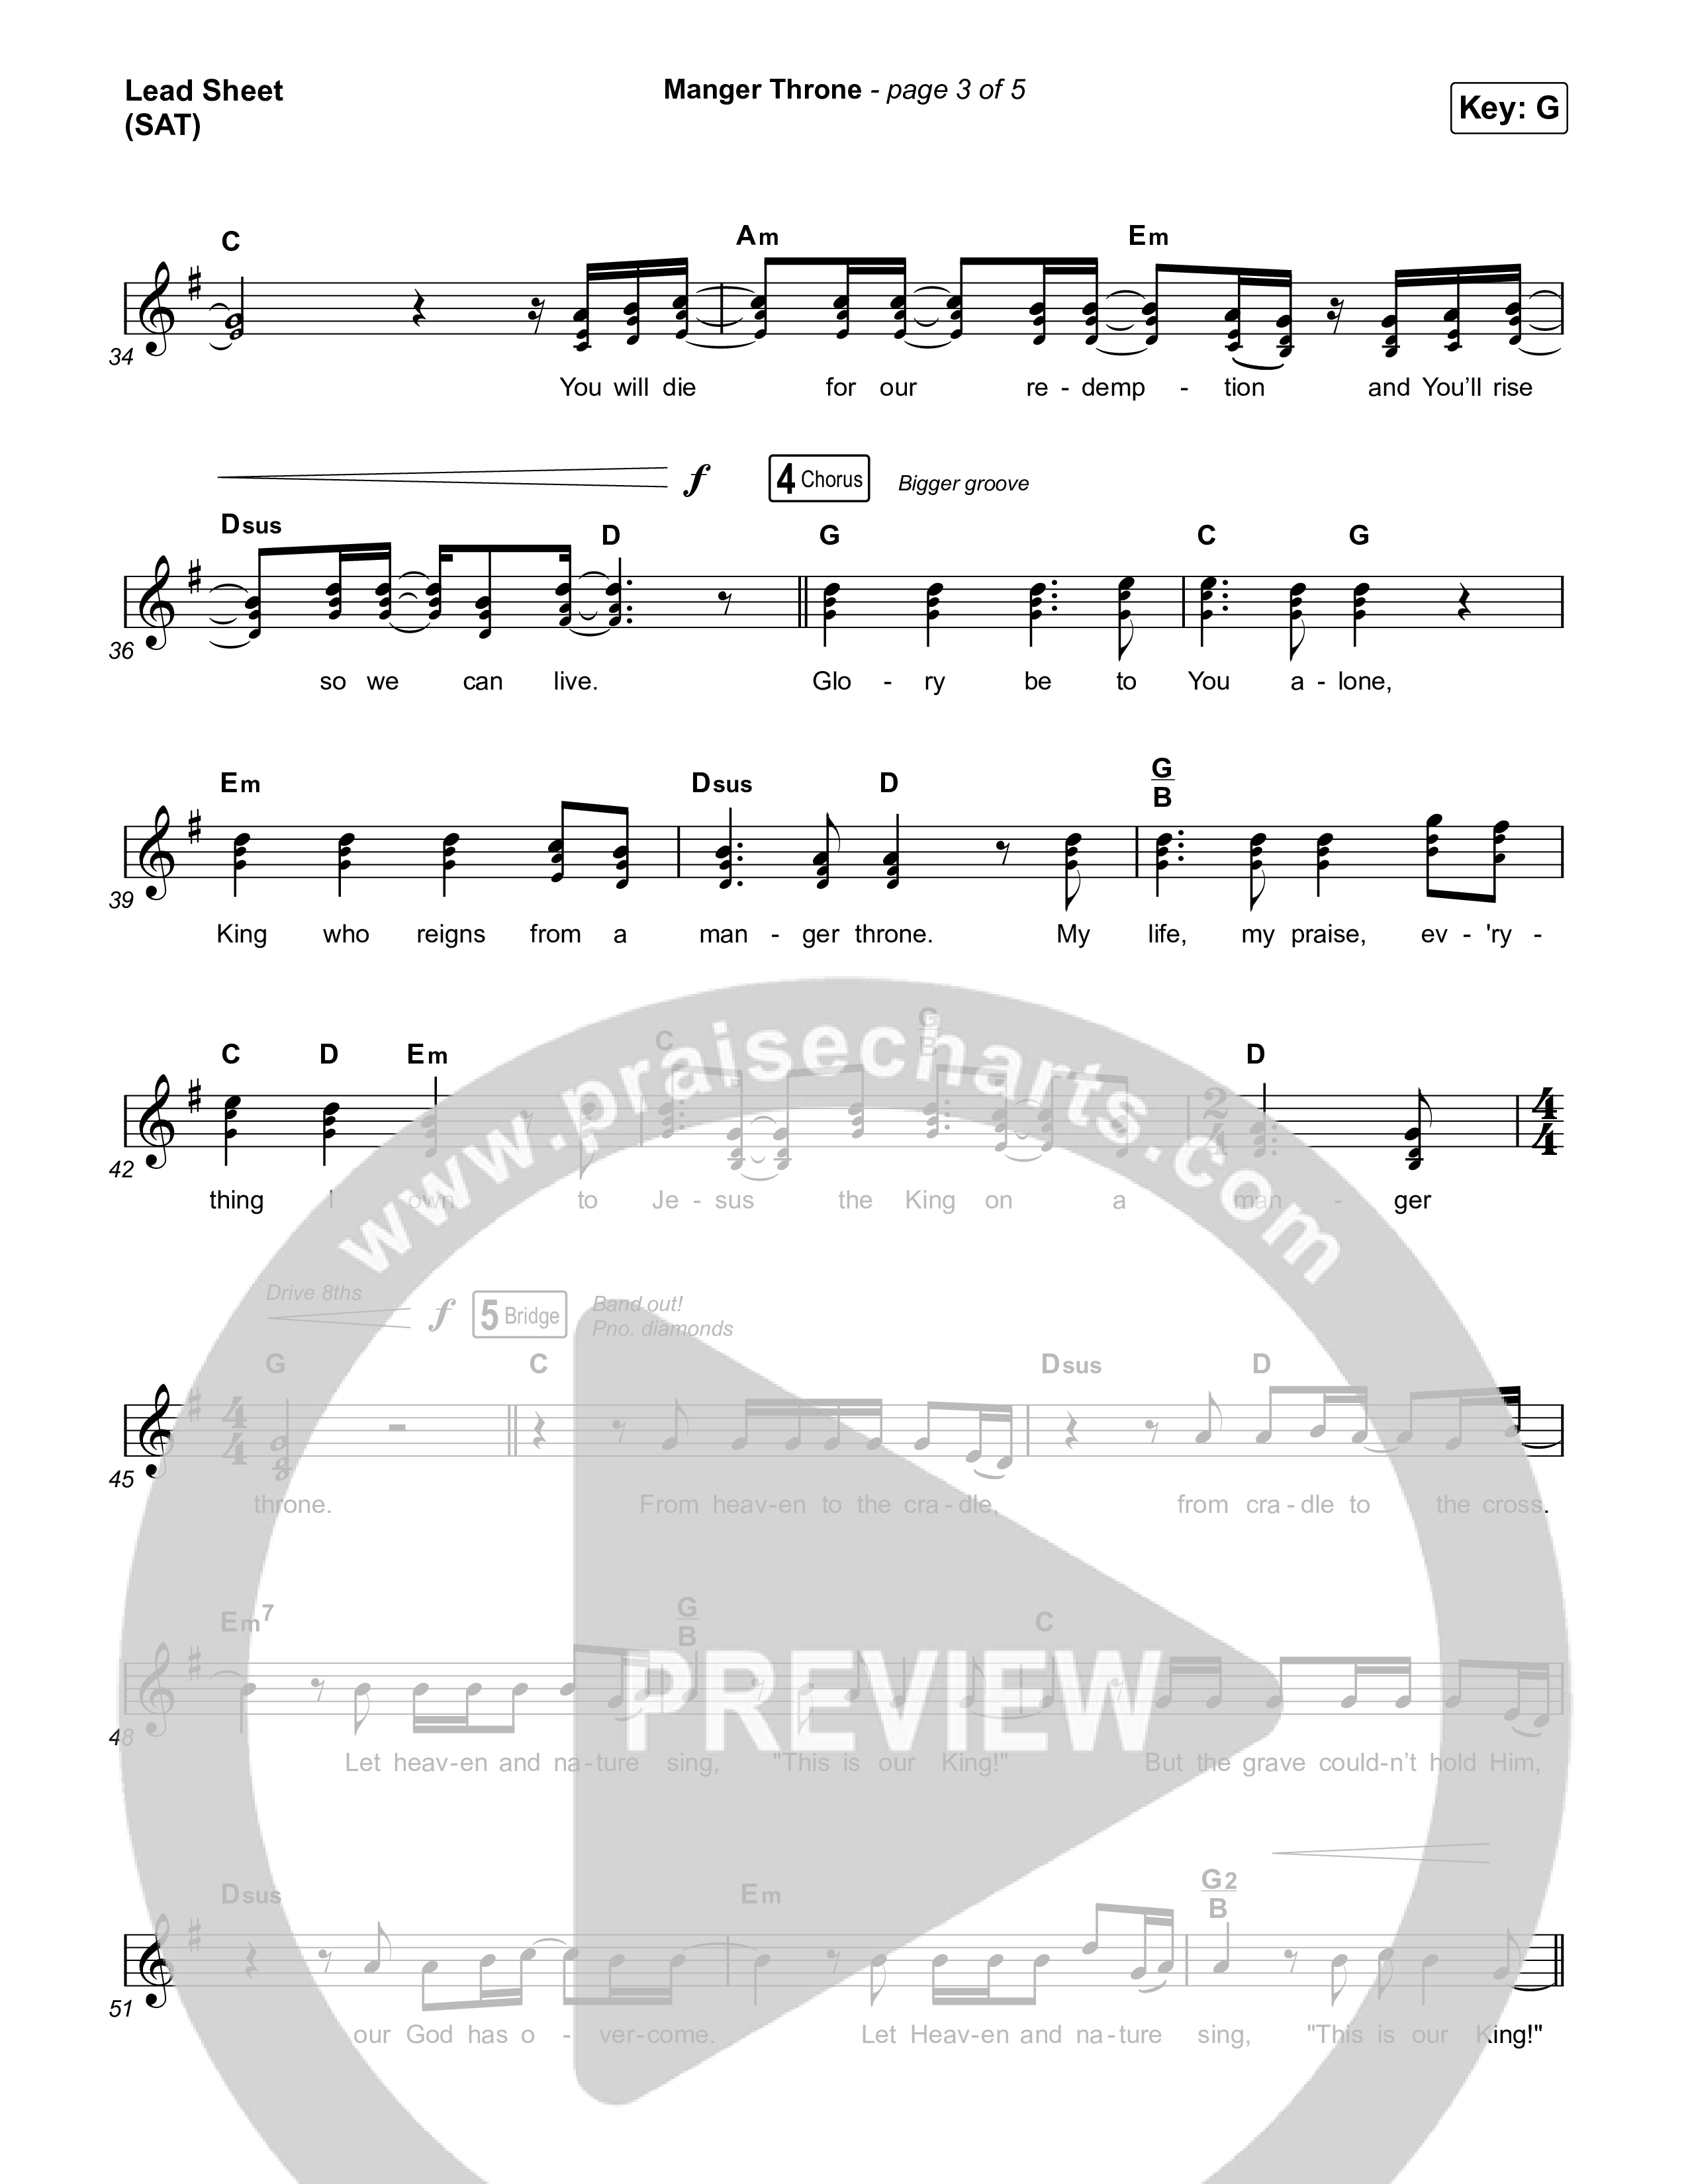 Manger Throne (Choral Anthem SATB) Lead Sheet (SAT) (Phil Wickham / Arr. Erik Foster)